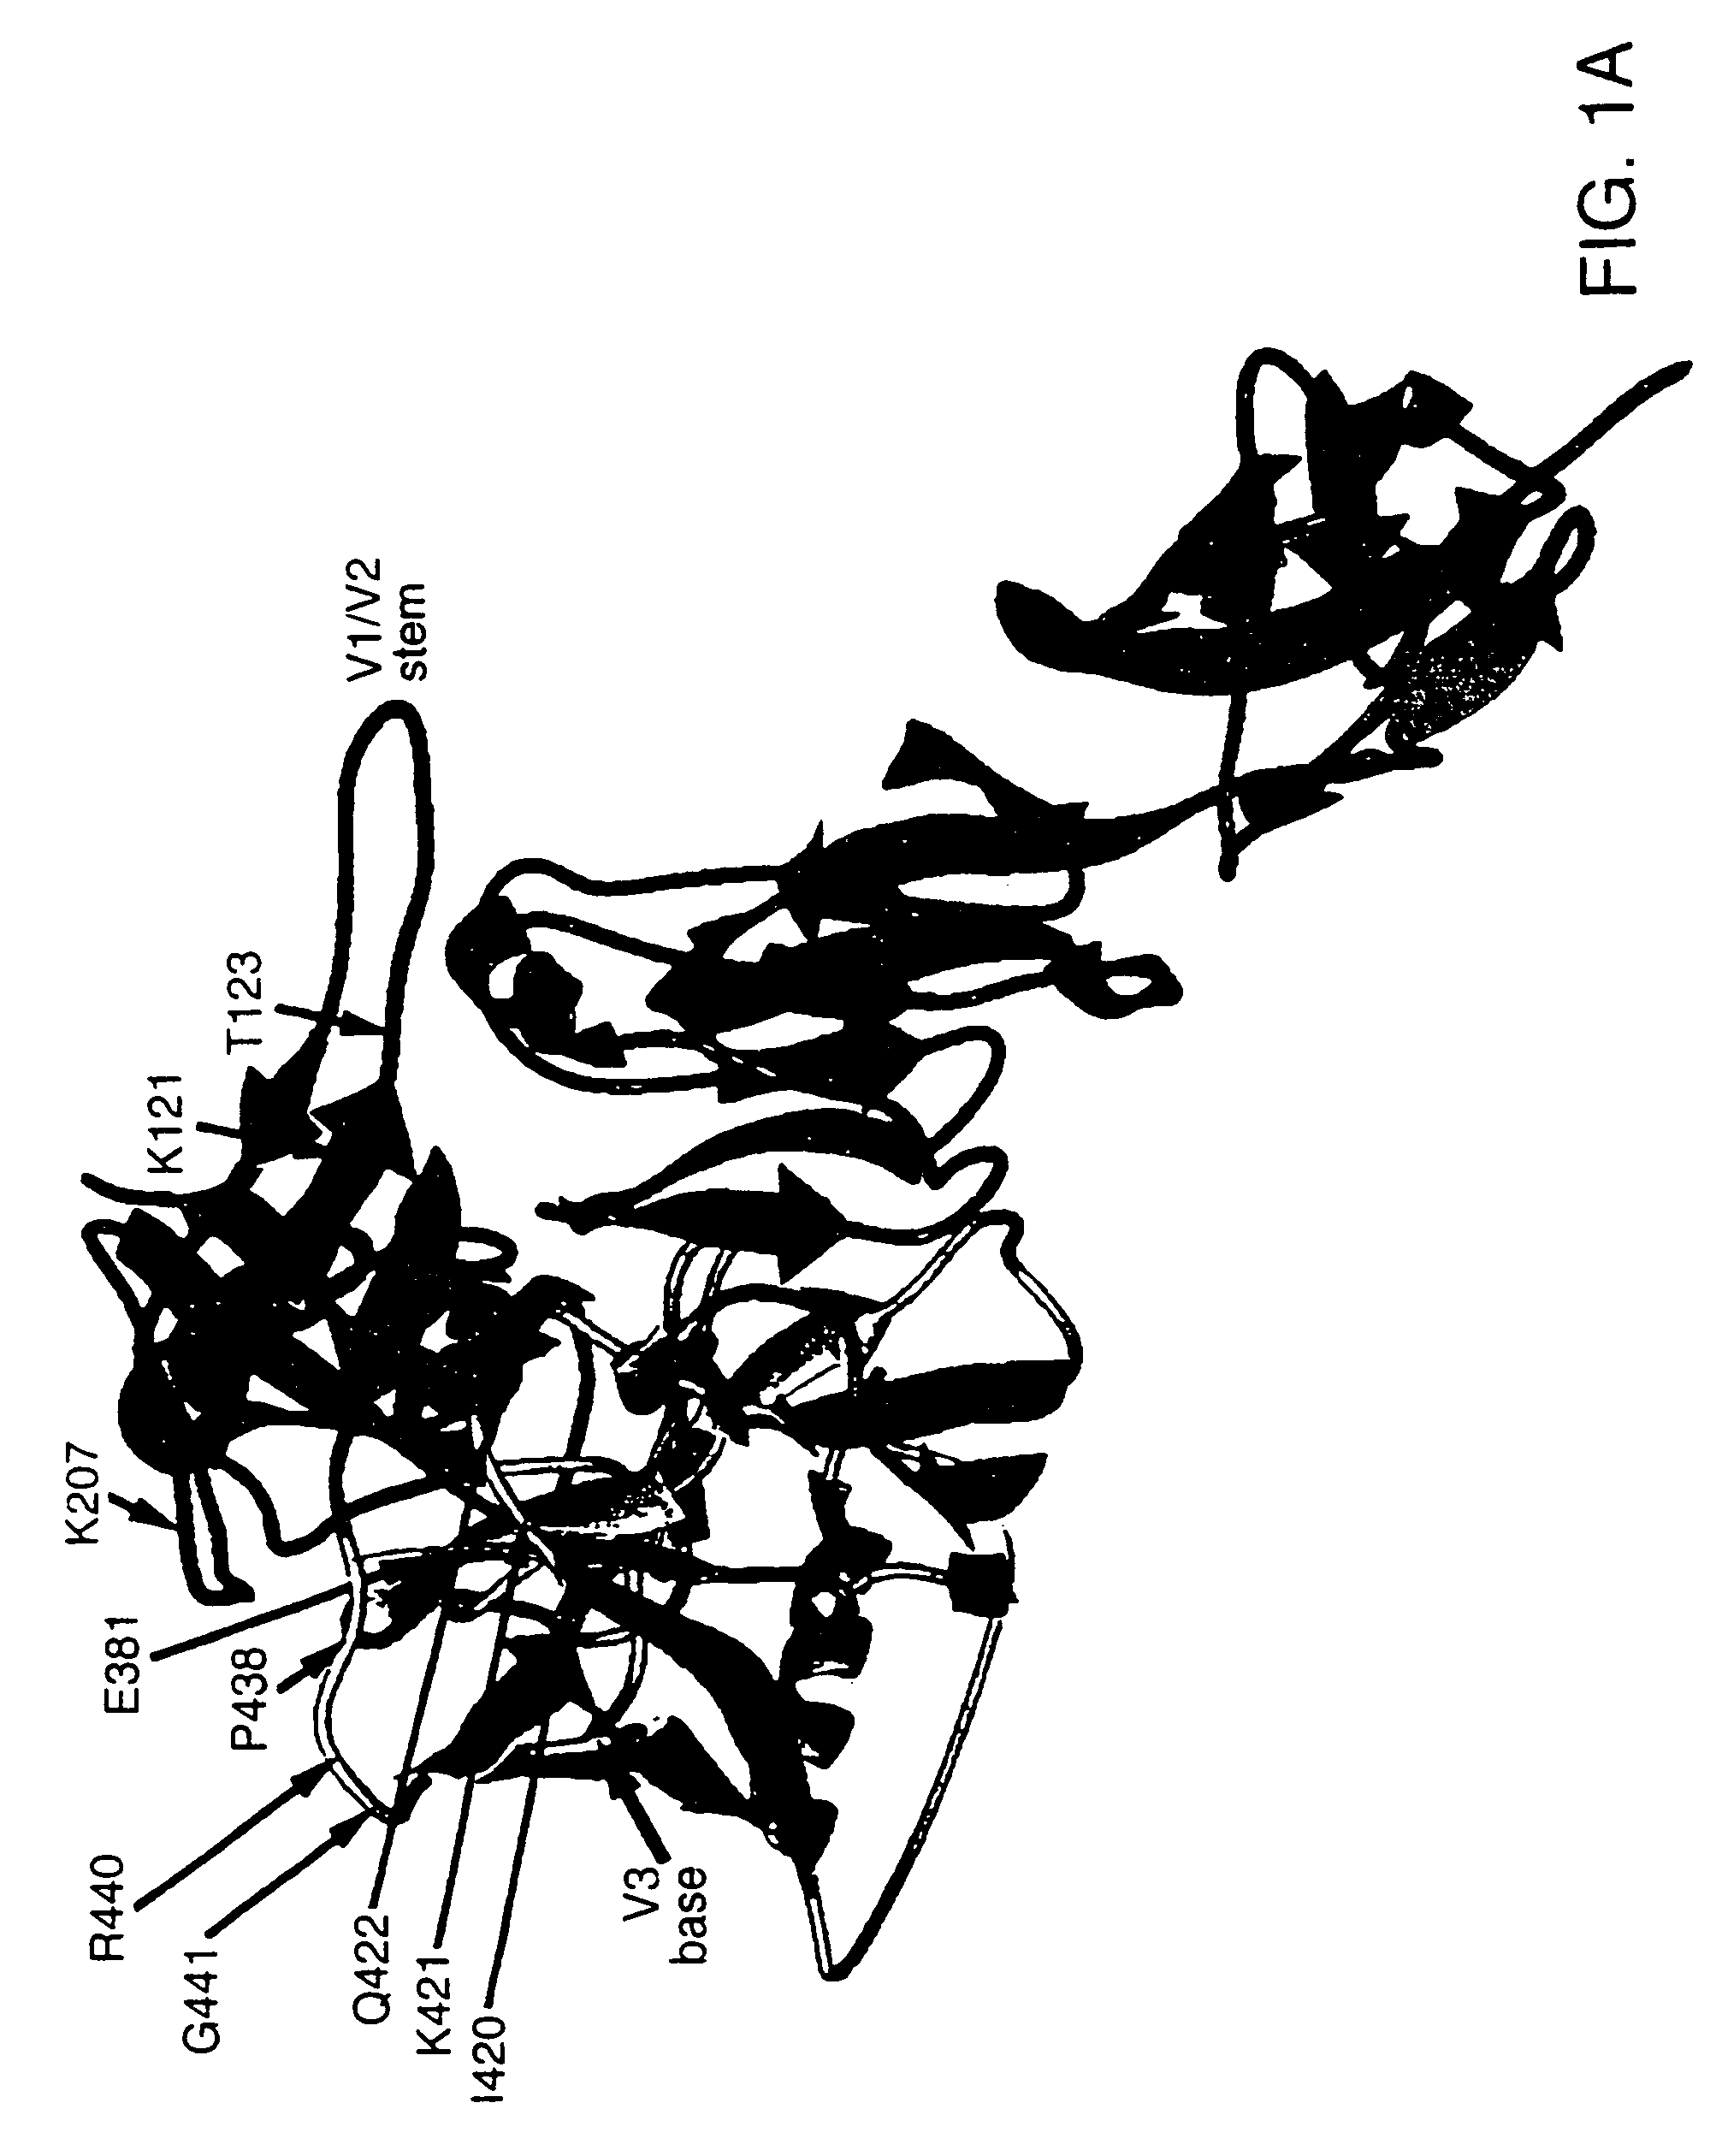 Stabilized primate lentivirus envelope glycoproteins